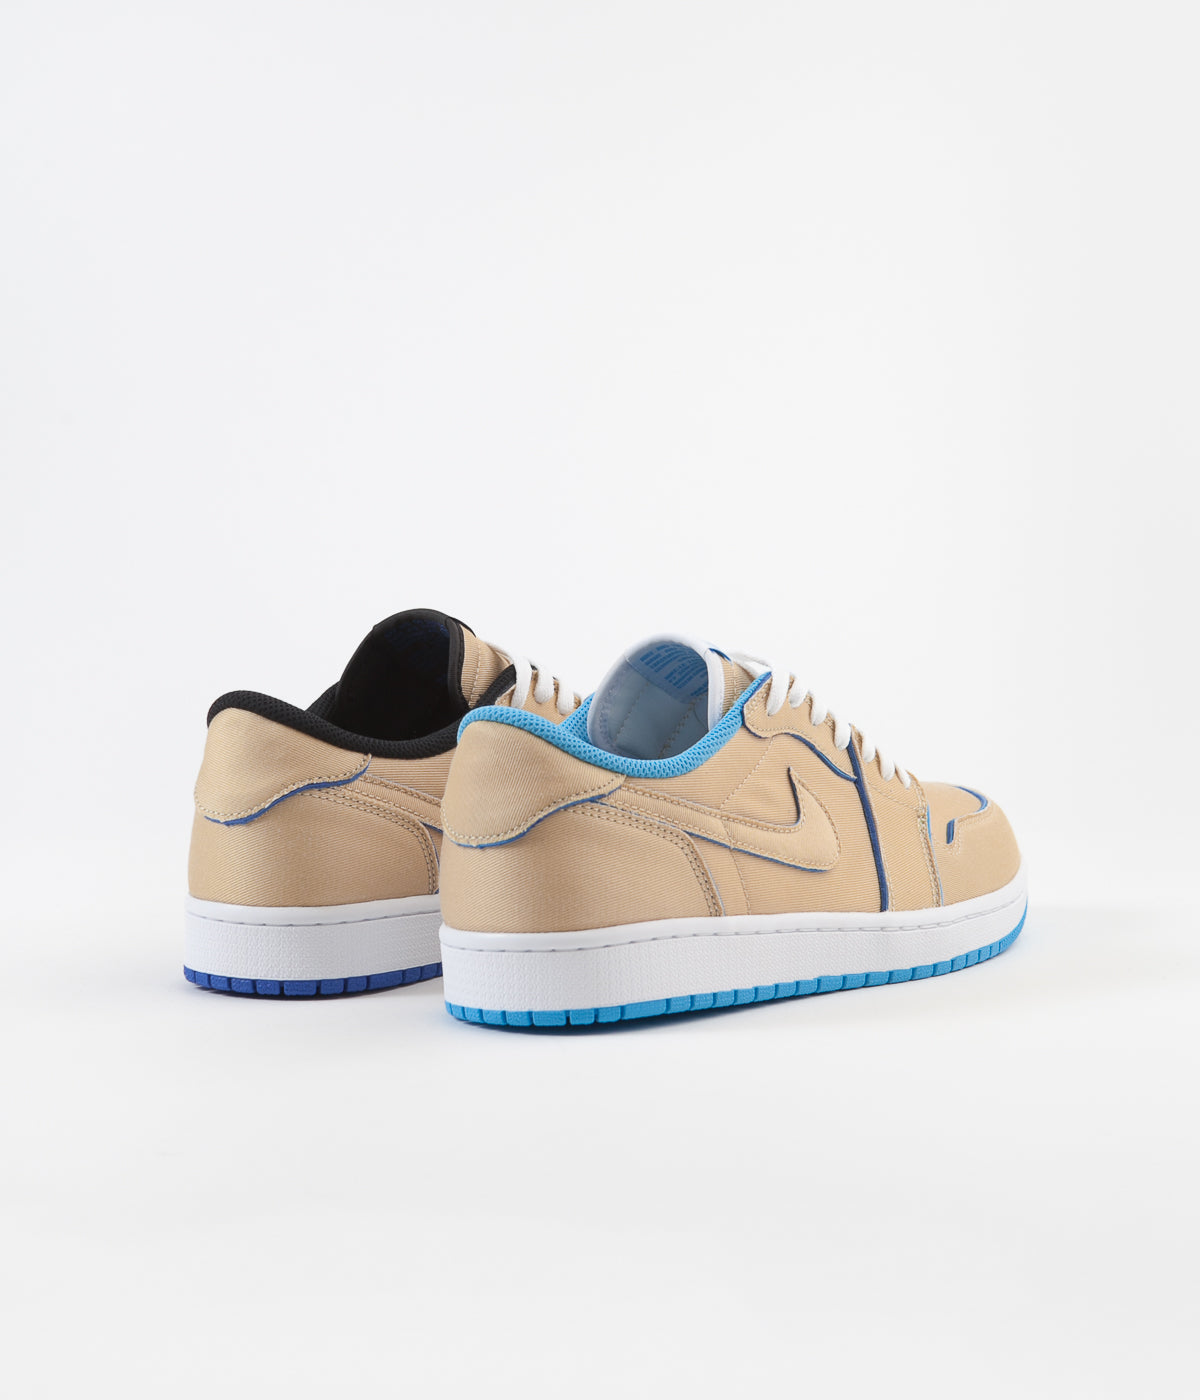 Nike SB x Air Jordan 1 Low Shoes - Desert Ore / Royal Blue - Dark